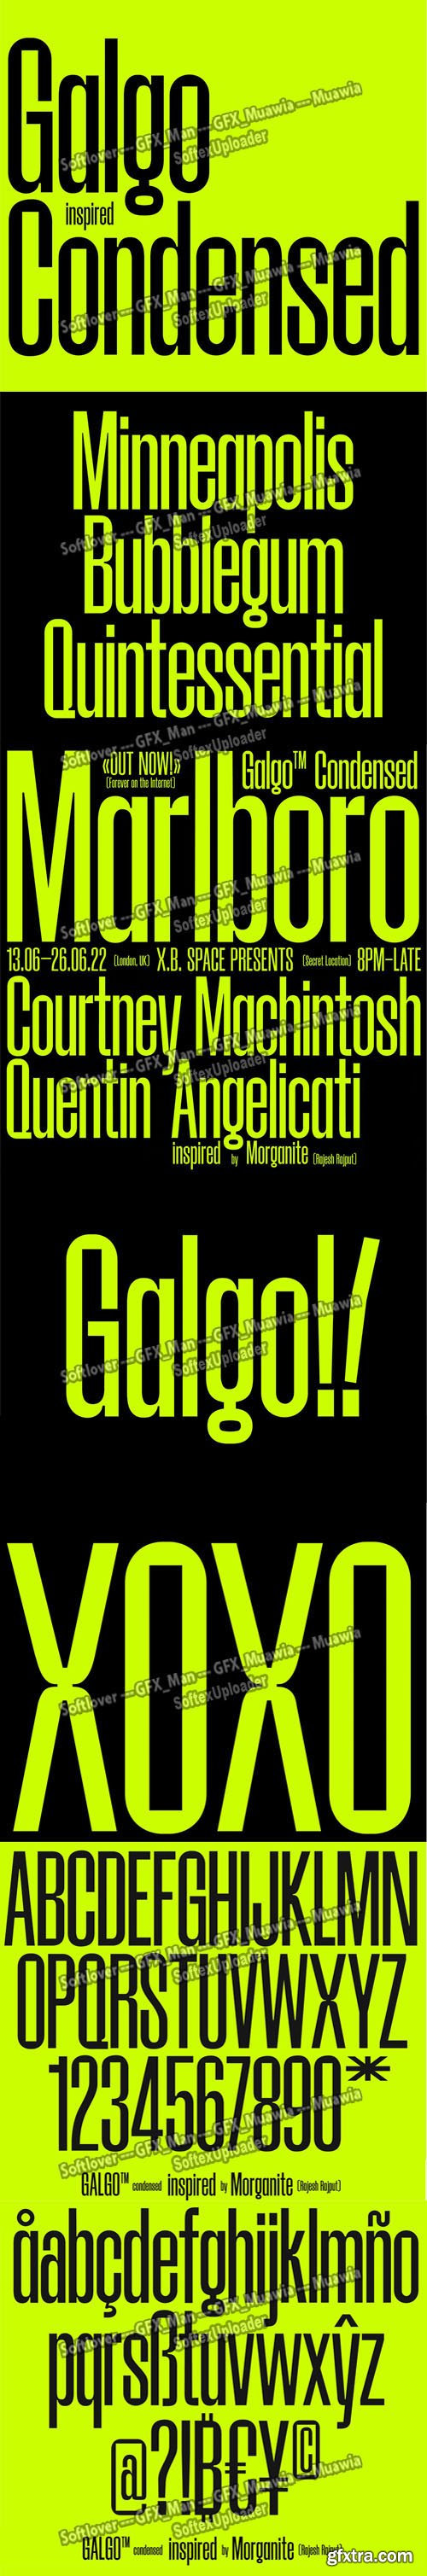 Galgo Condensed Tall Sans Serif Font